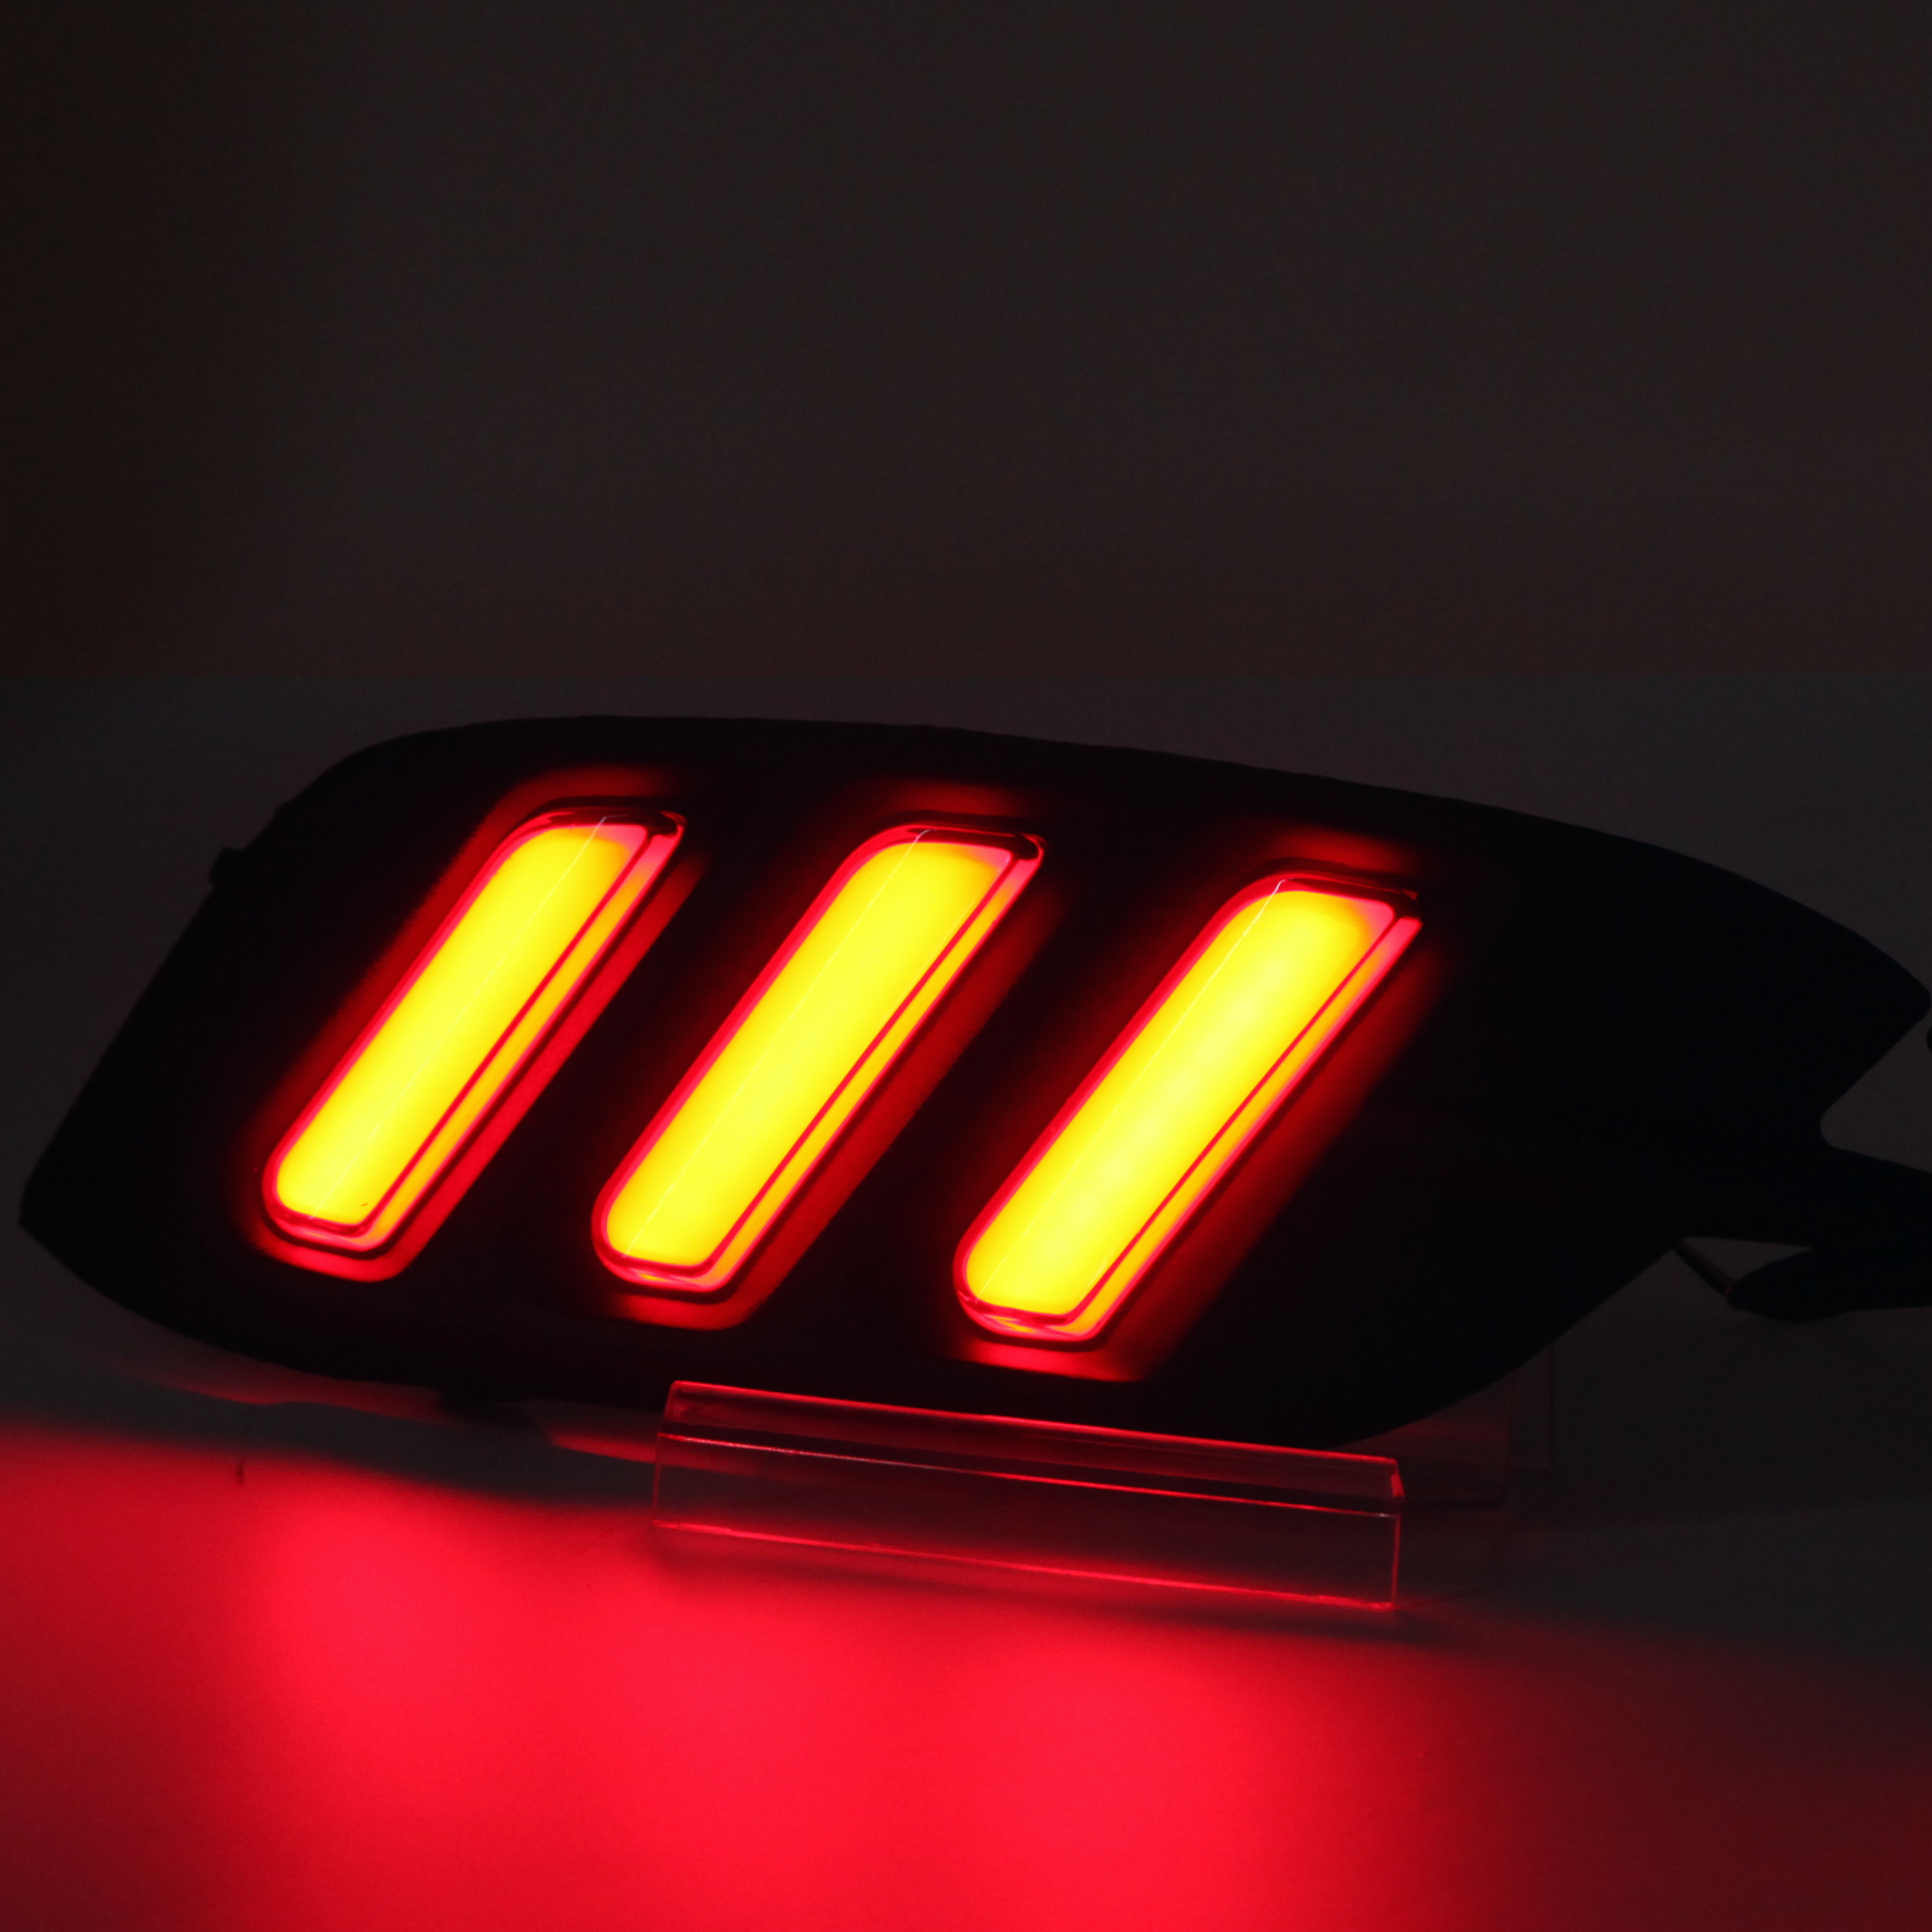 LAMB0RGHINI and MUSTAN9 Styles of Rear Bumper Tail Lamp Reflector for H0NDA C!VIC